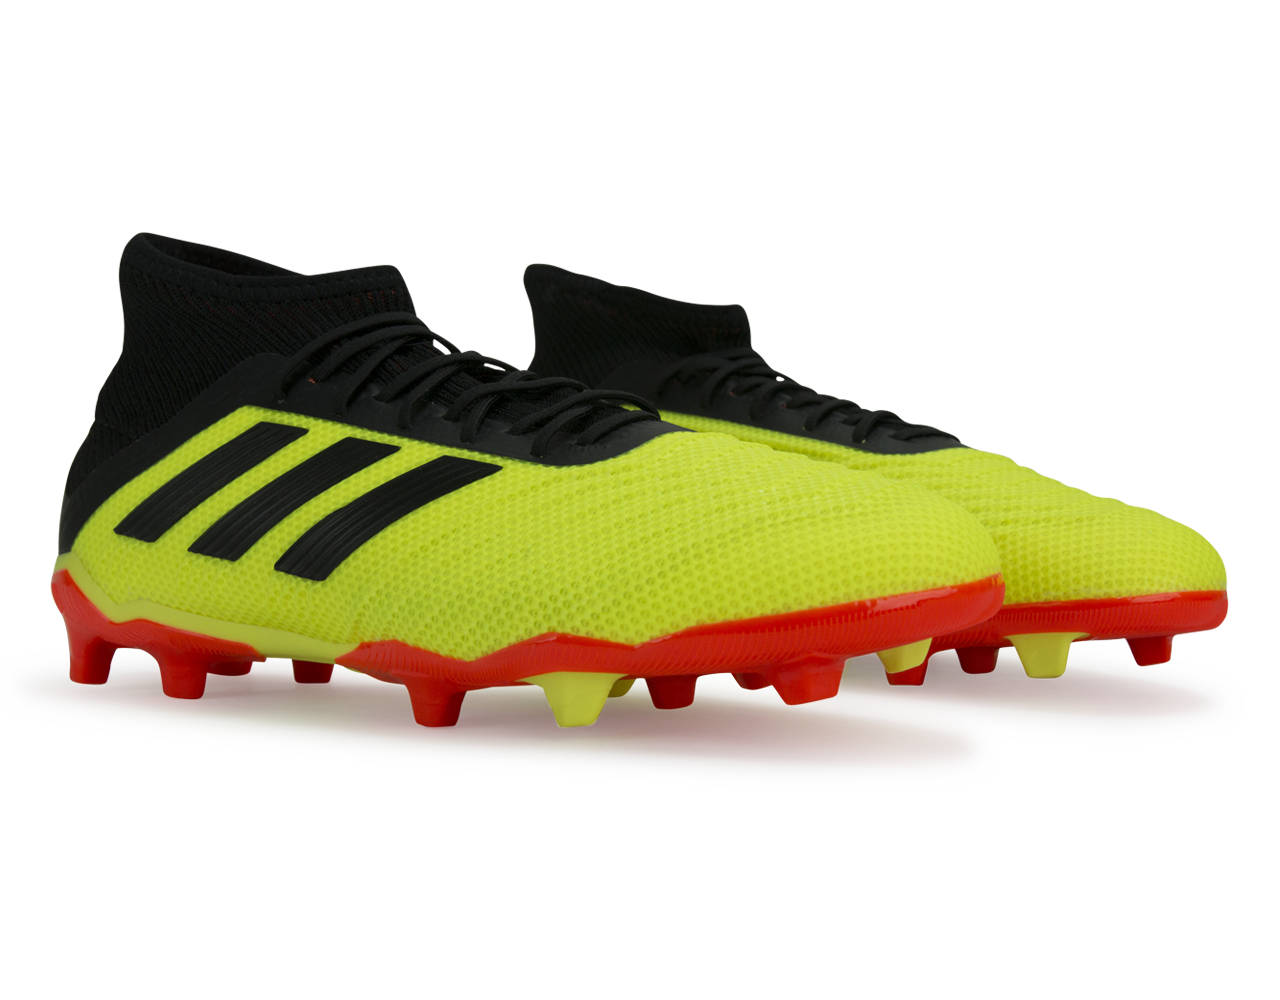 Adidas Kids' Predator 18.1 FG Soccer Cleats, Black